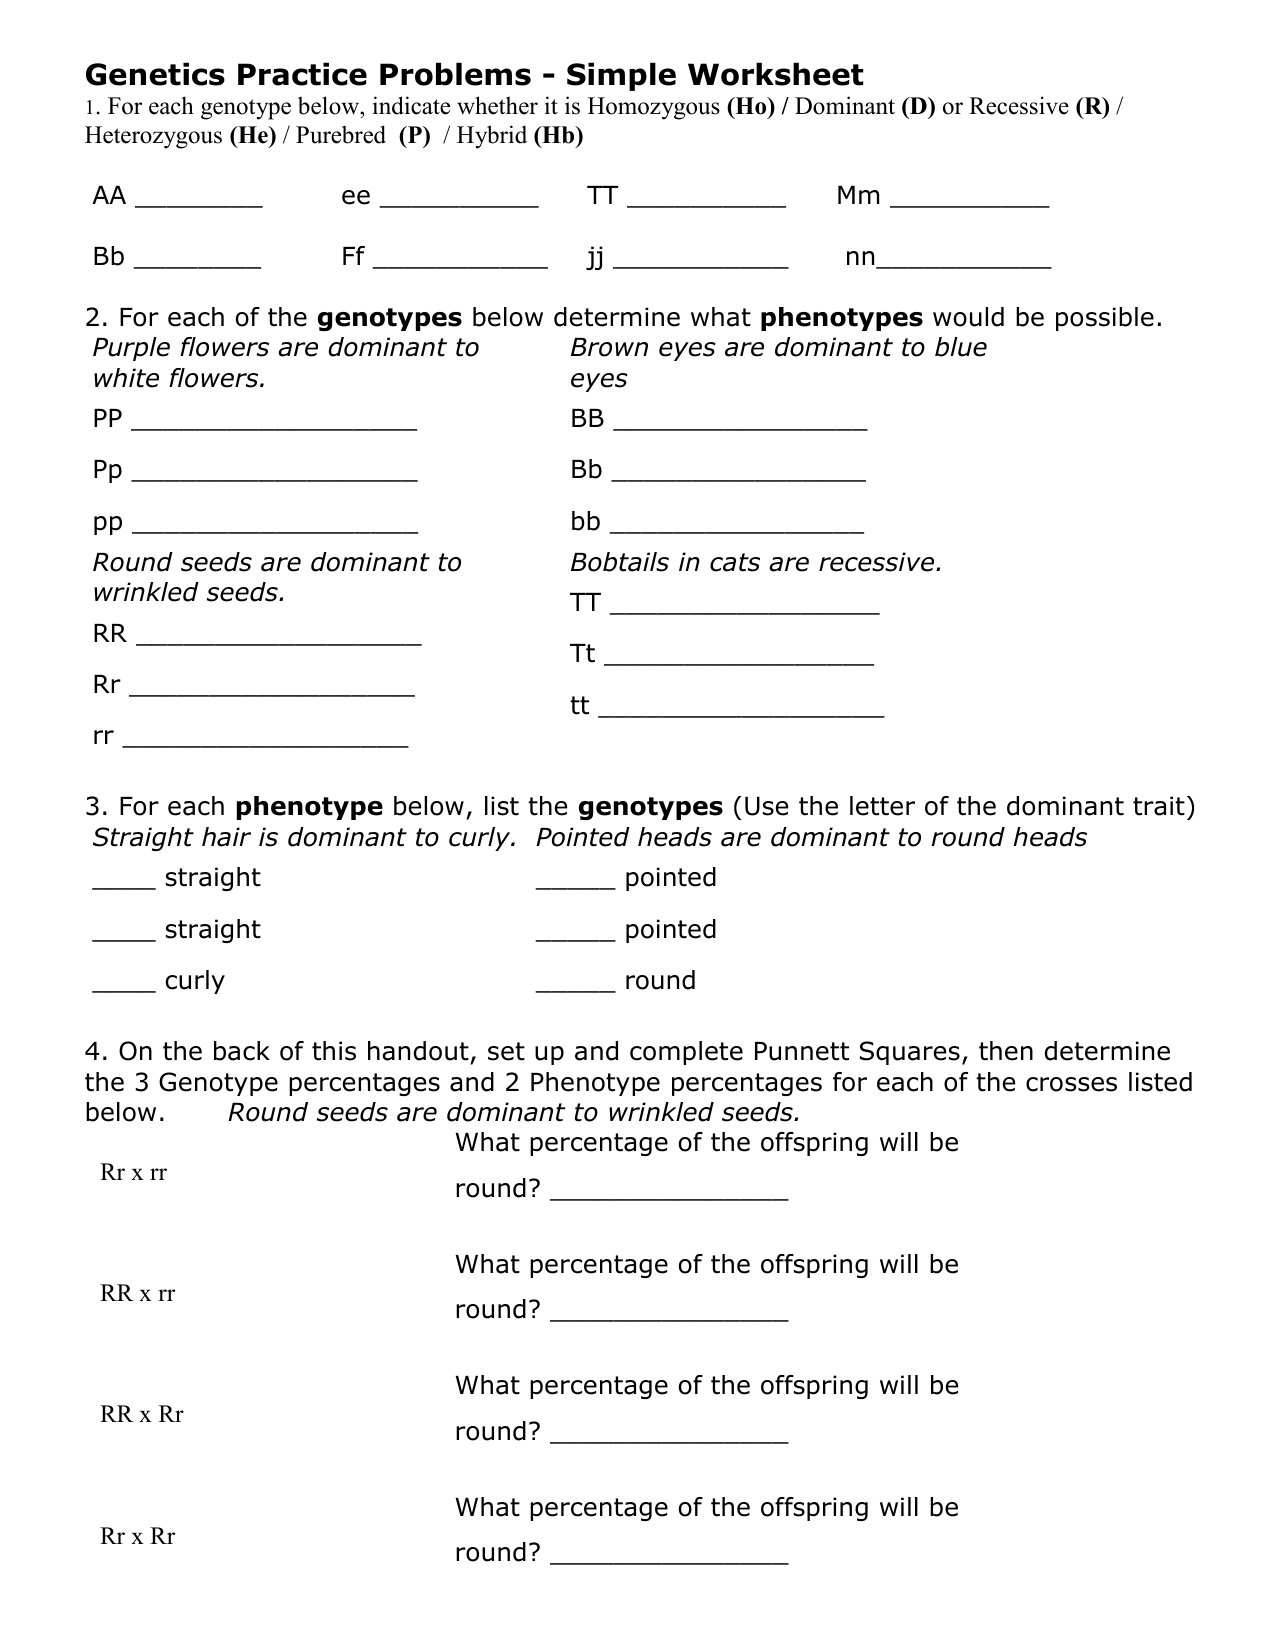 Genetics Practice Problems - Simple Worksheet Within Genetics Practice Problems Simple Worksheet